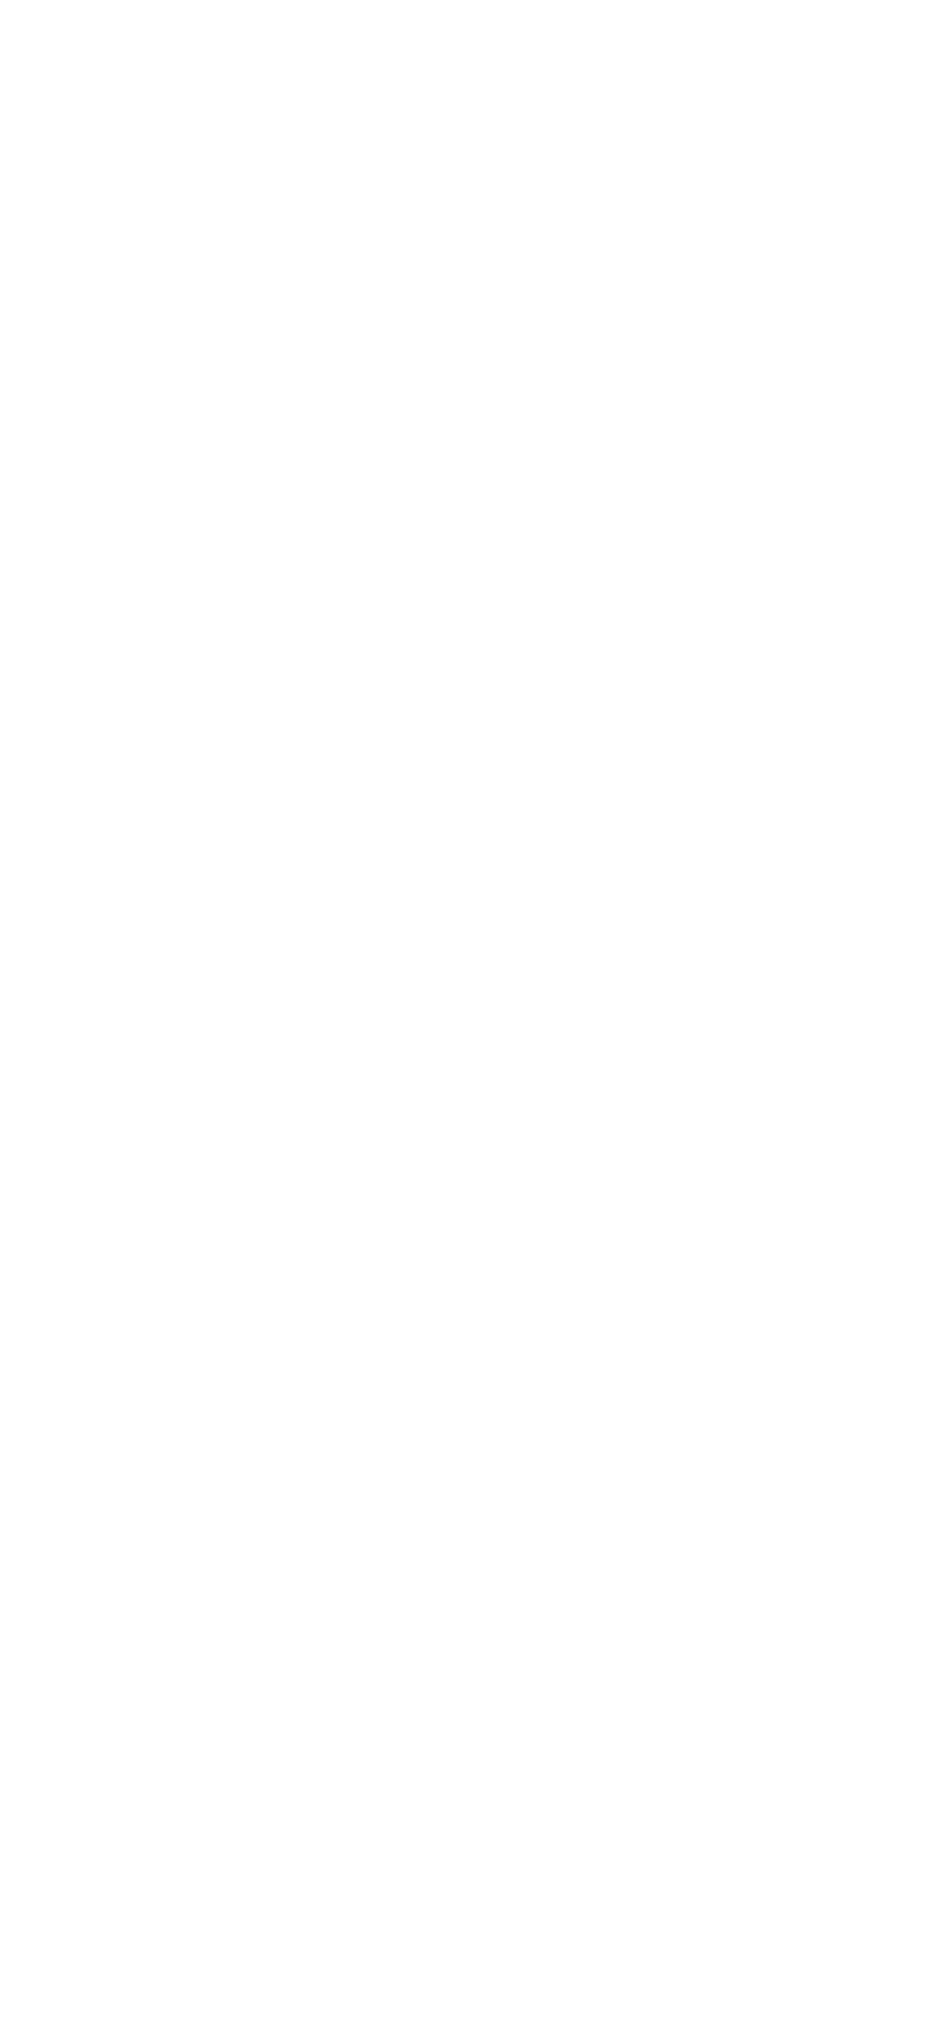 Commune Cologny Logo